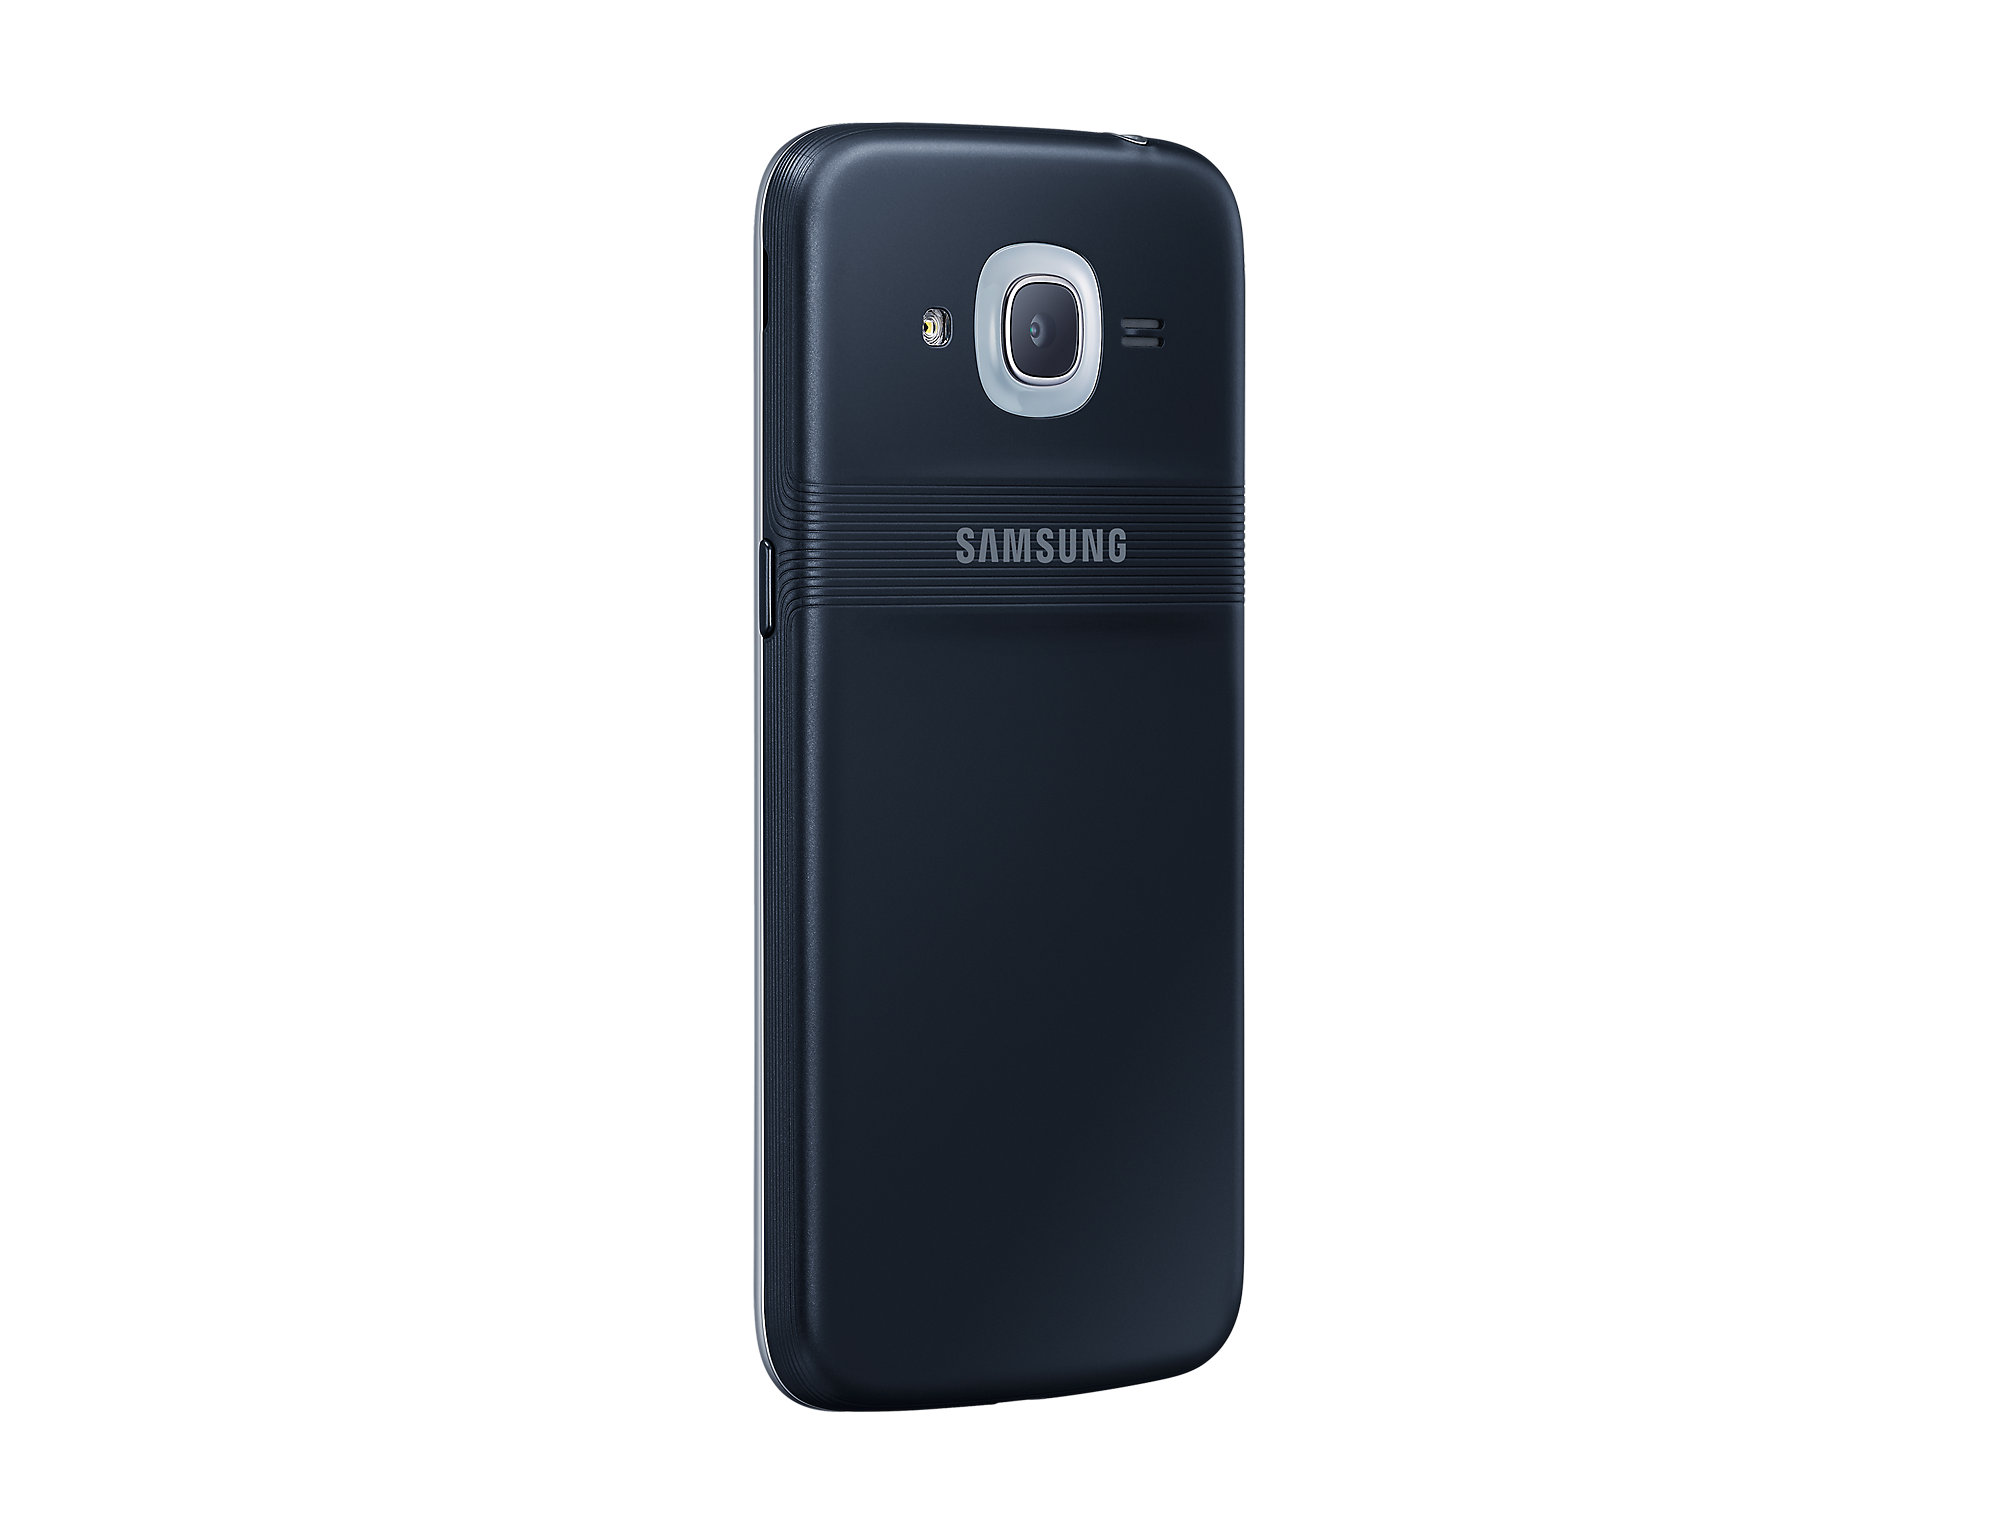  Samsung Galaxy J2 Pro (2016)